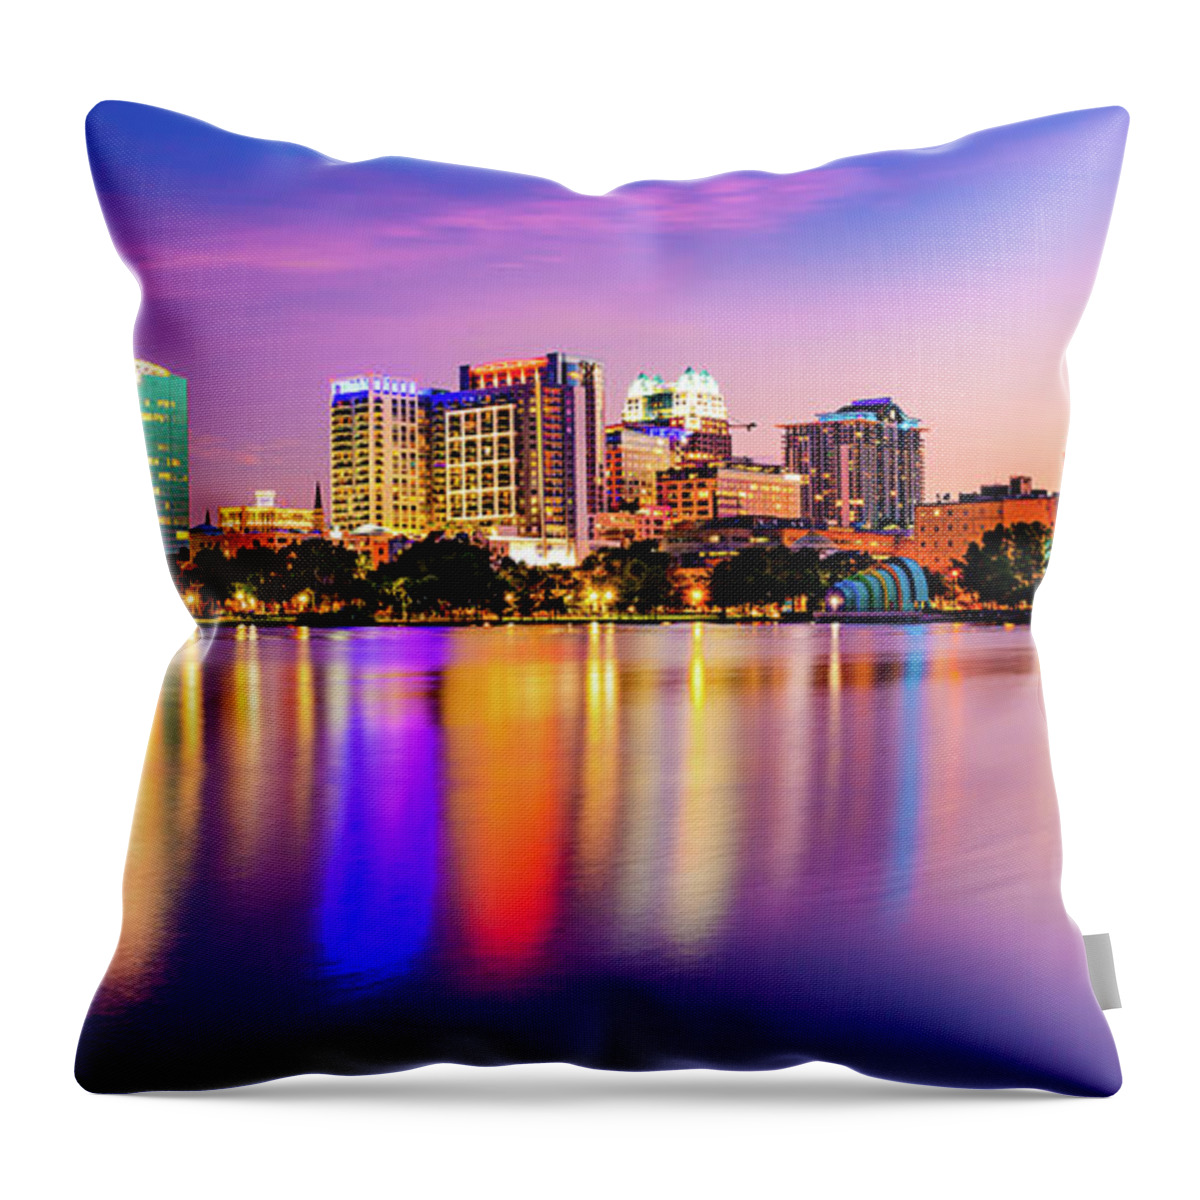 Orlando Florida Throw Pillow featuring the photograph Orlando Florida Panoramic City Skyline Over Lake Eola by Gregory Ballos